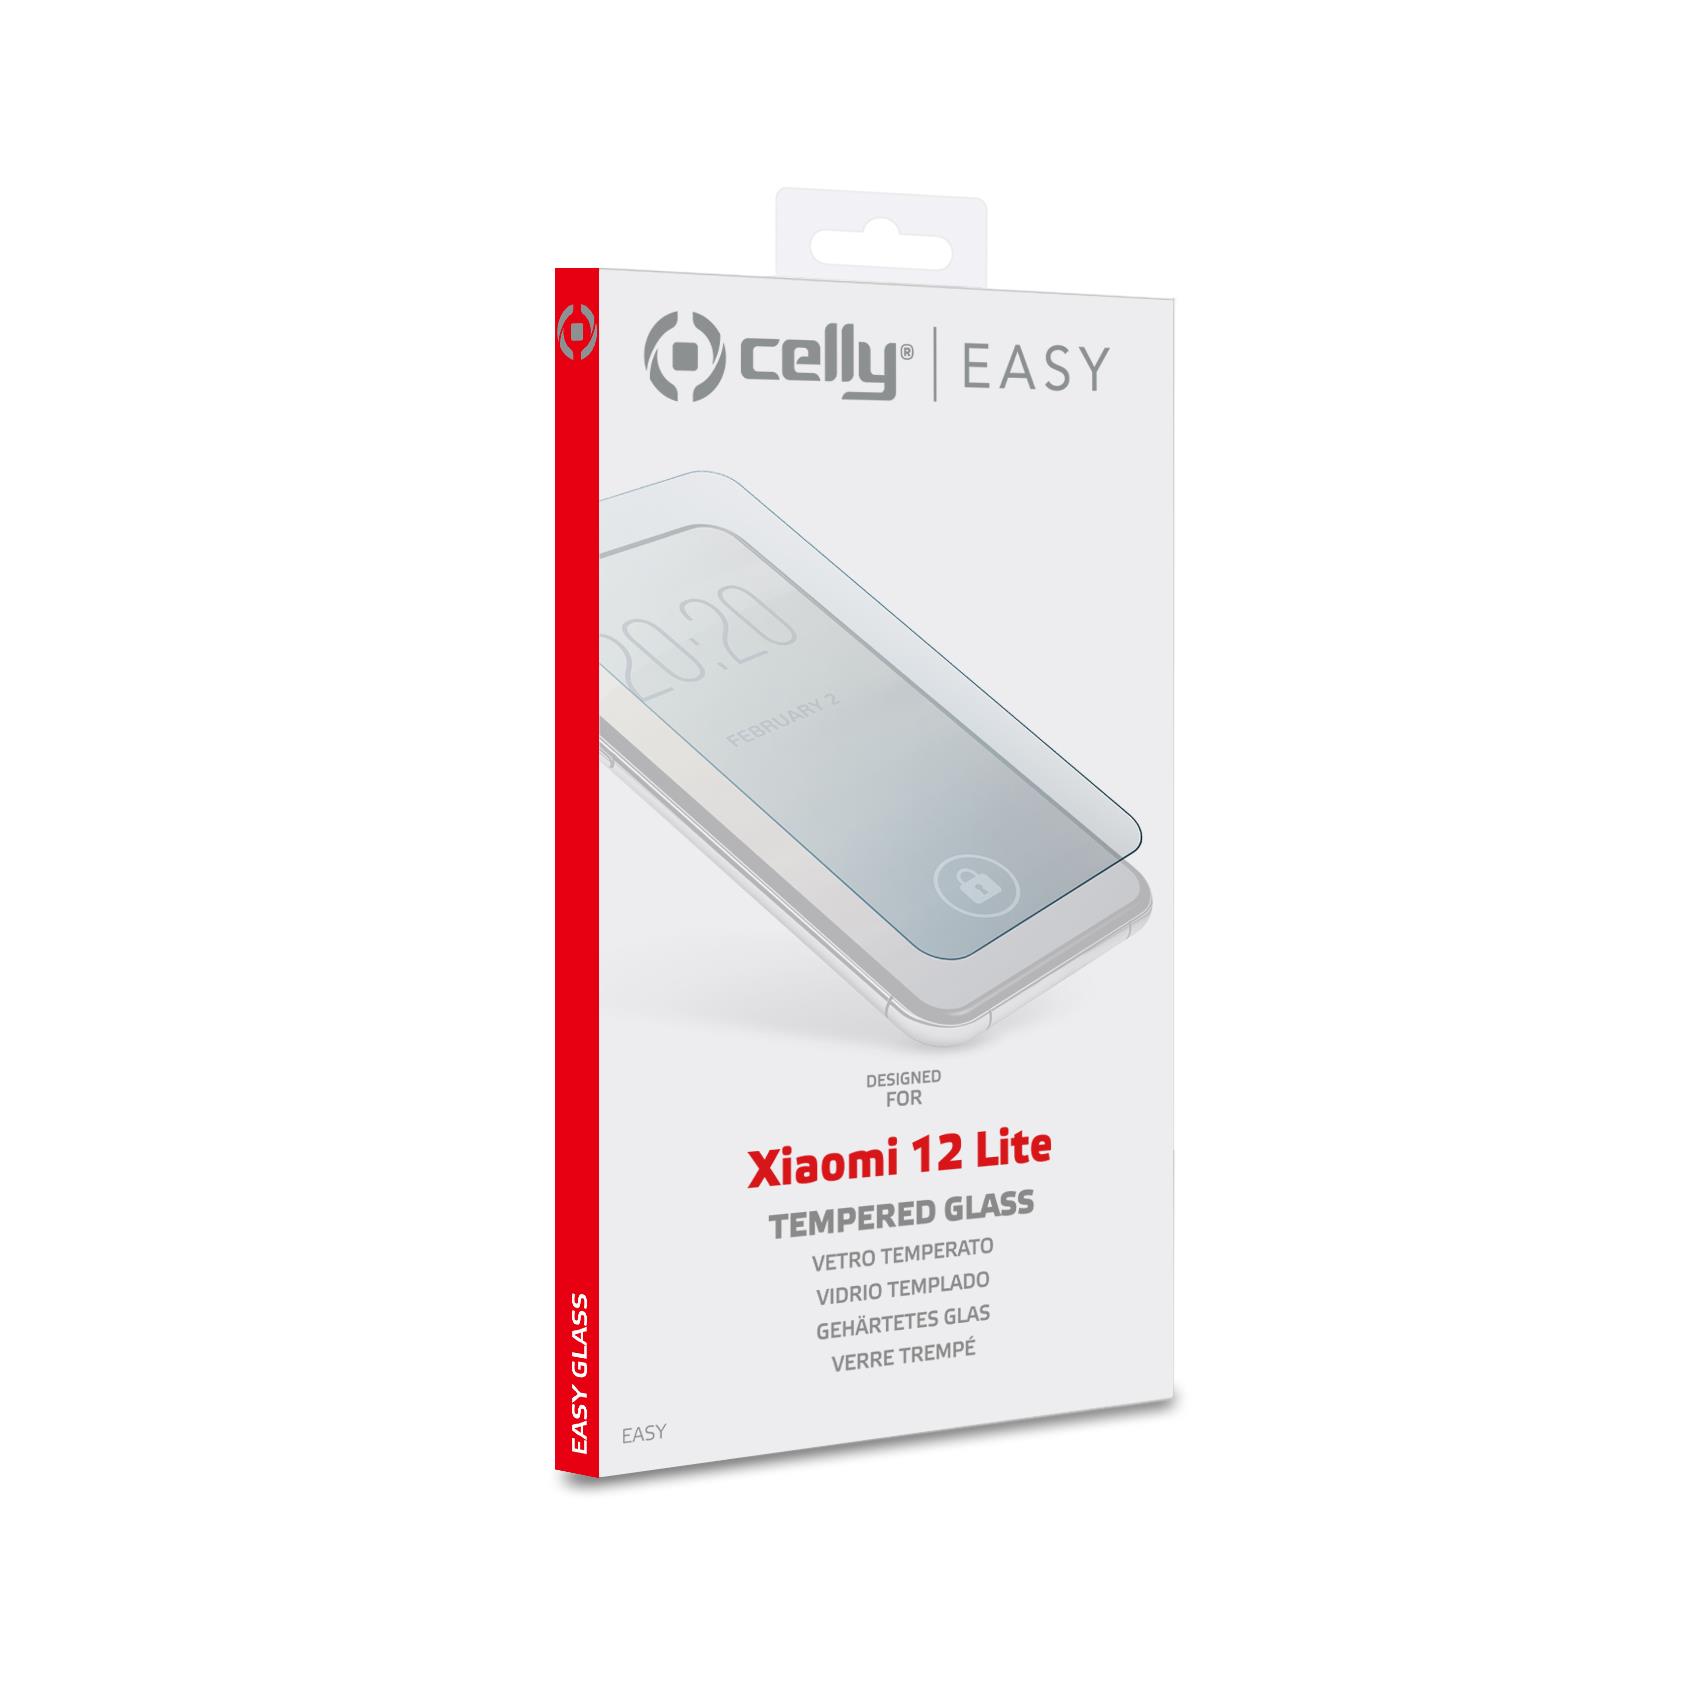 Easy Glass Xiaomi 12 Lite Celly Easy1019 8021735198826